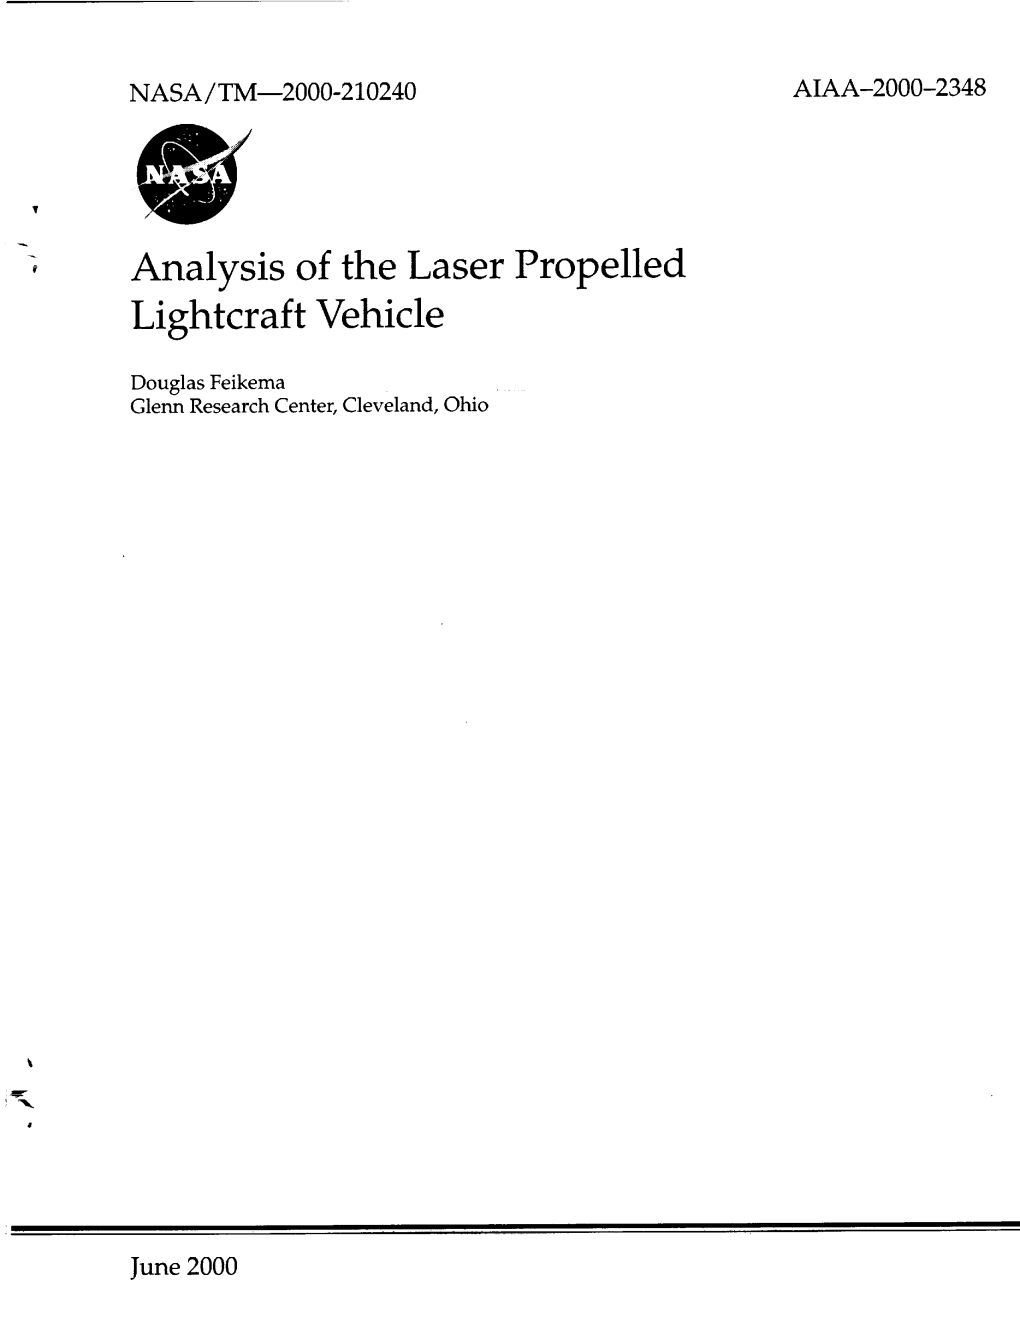 Analysis of the Laser Propelled Lightcraft Vehicle